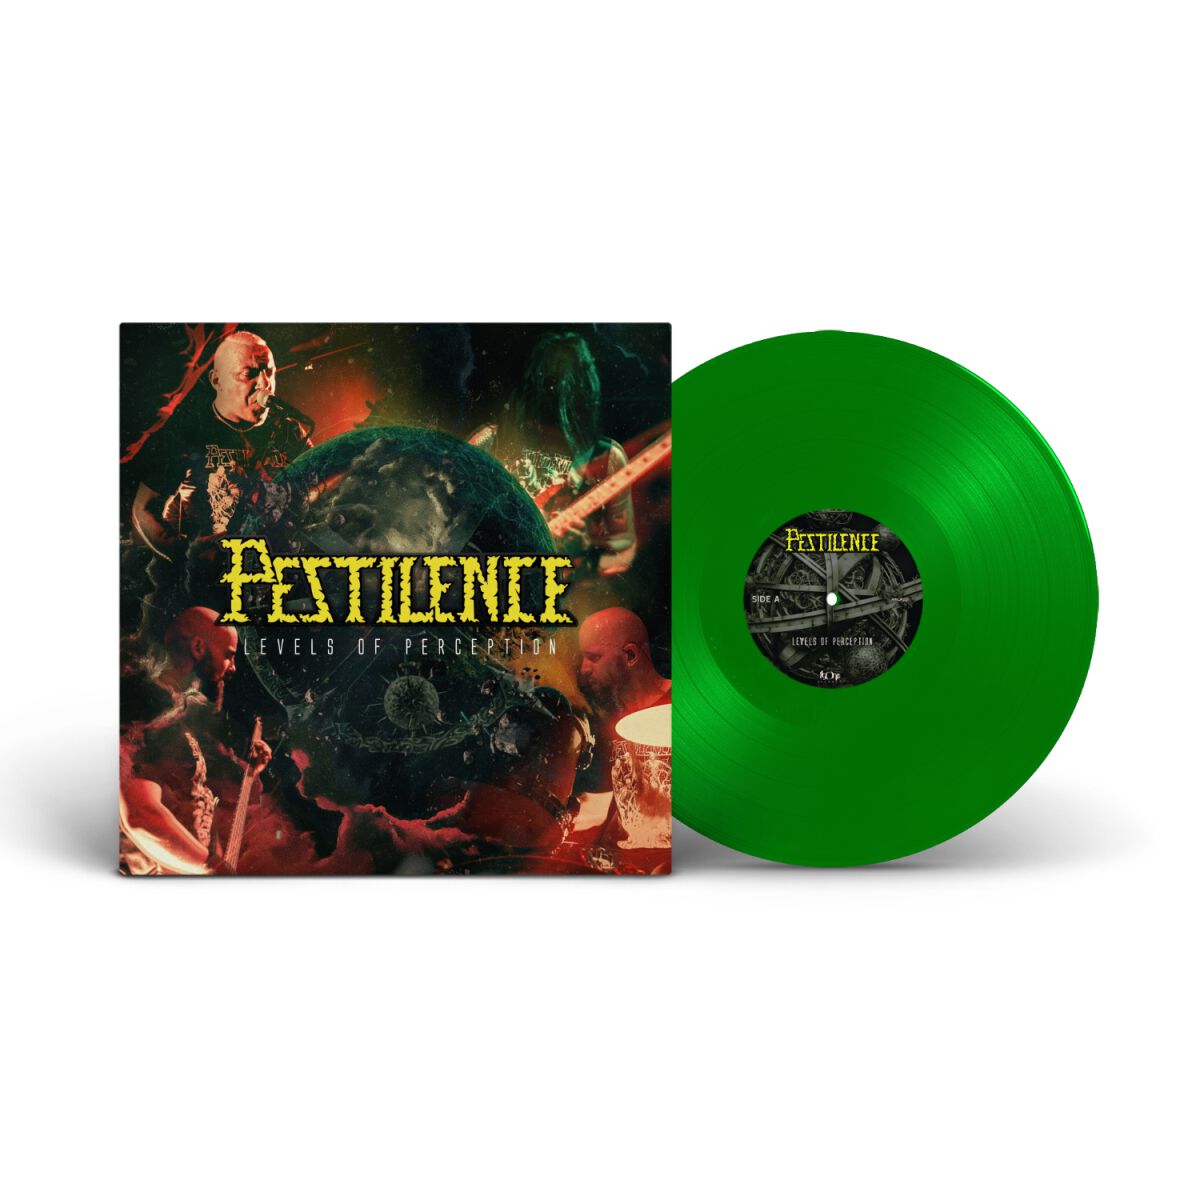 Level of Perception von Pestilence - LP (Coloured, Limited Edition)